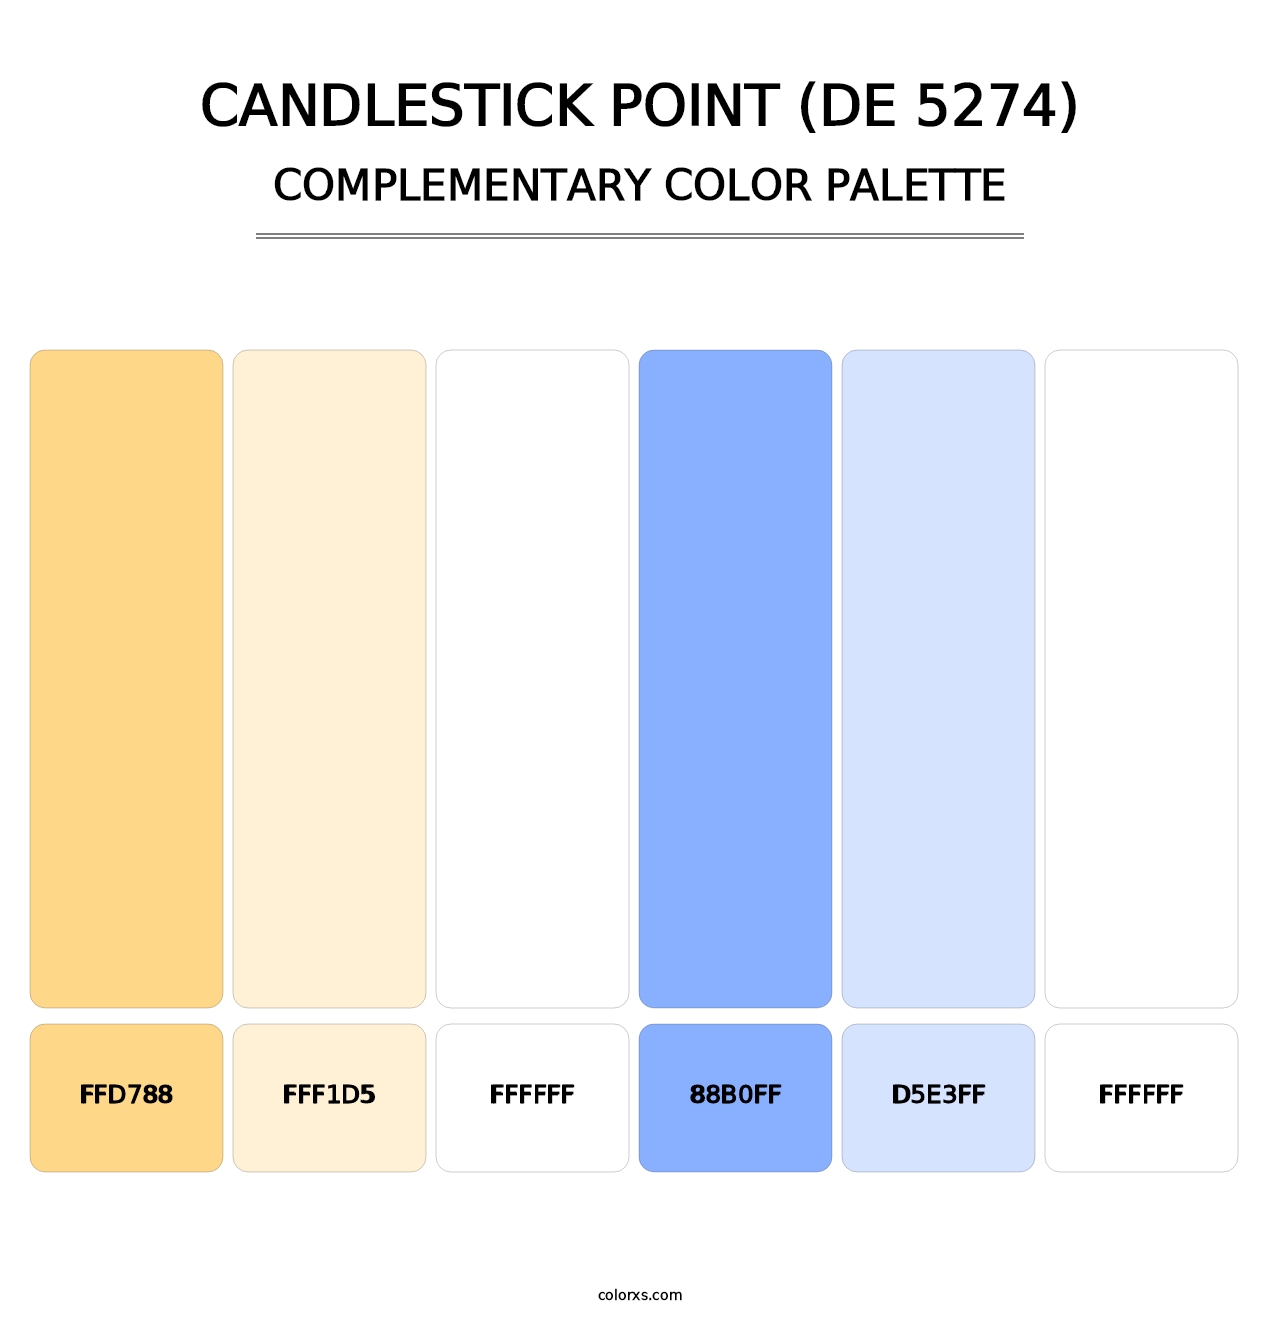 Candlestick Point (DE 5274) - Complementary Color Palette